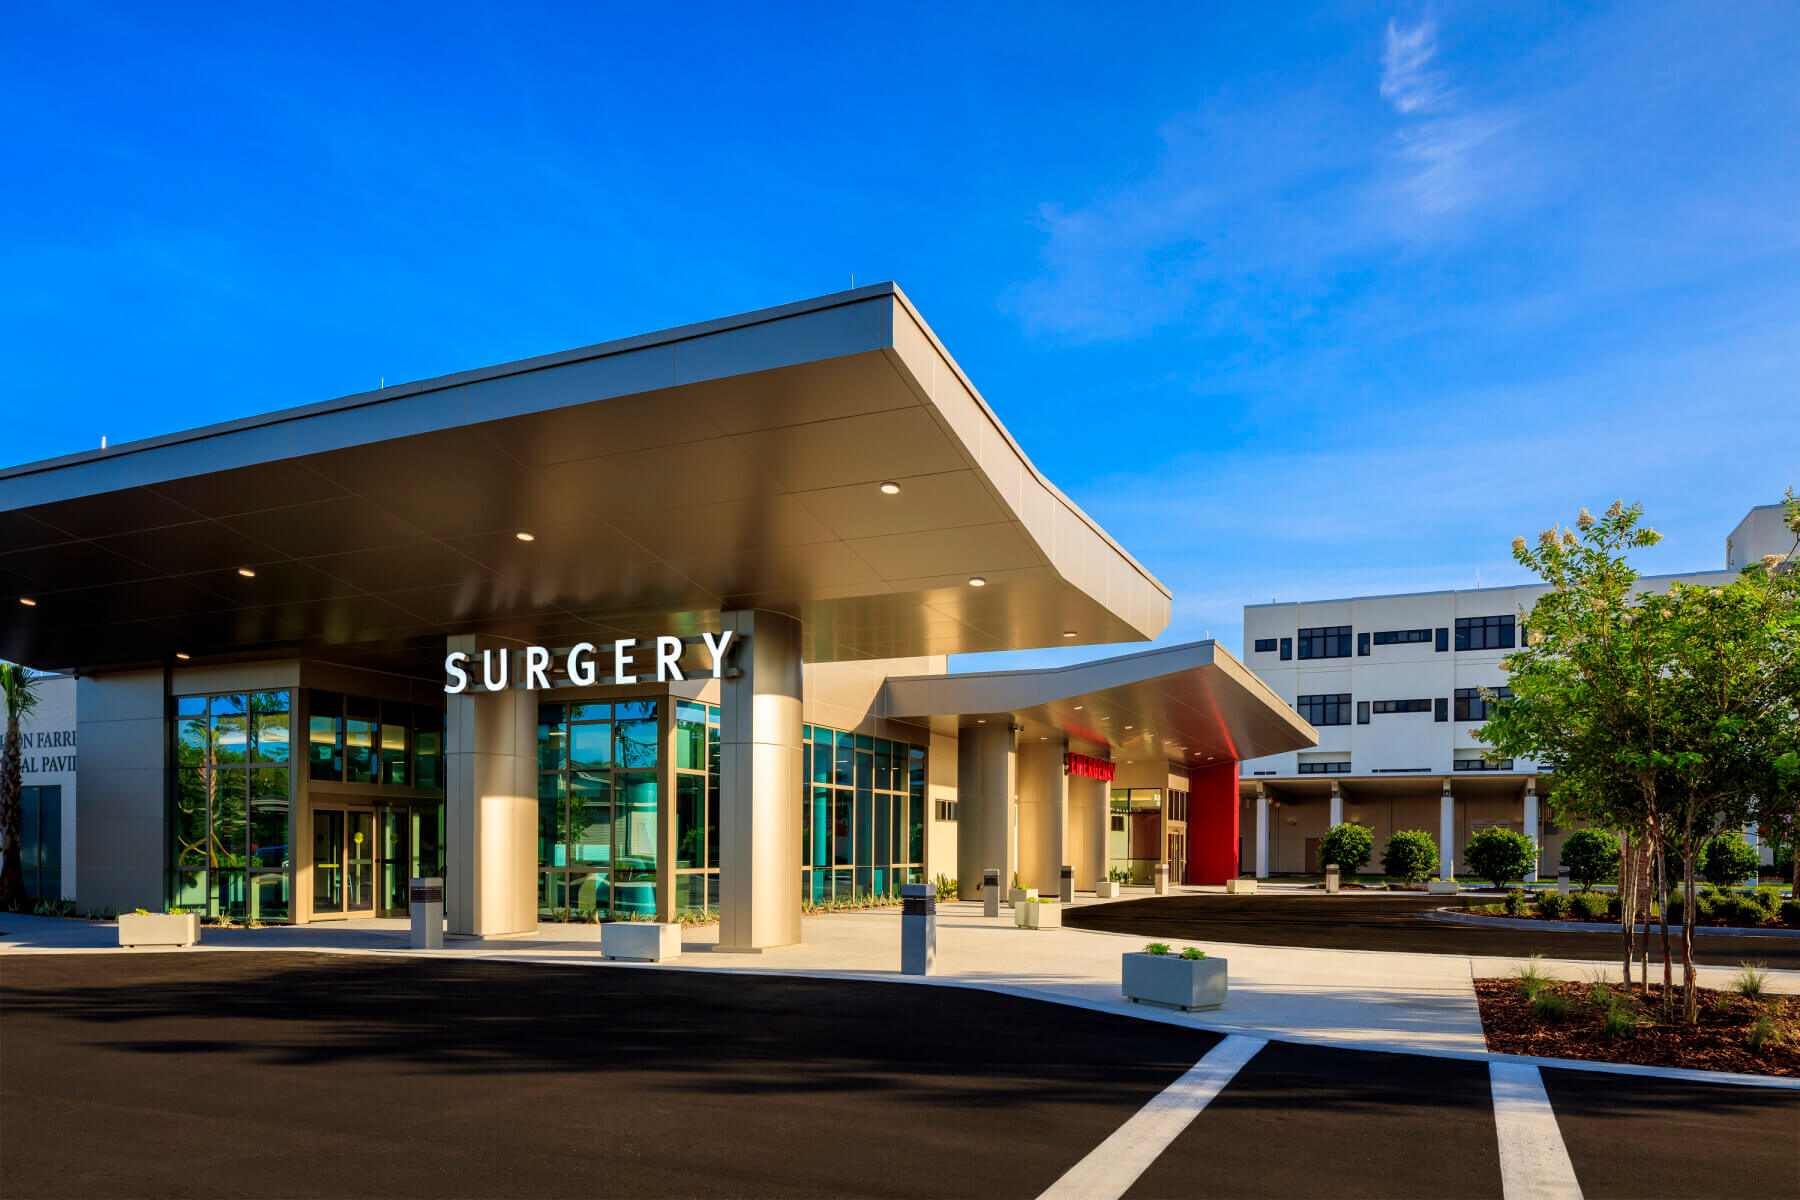 exterior of surgery entrance